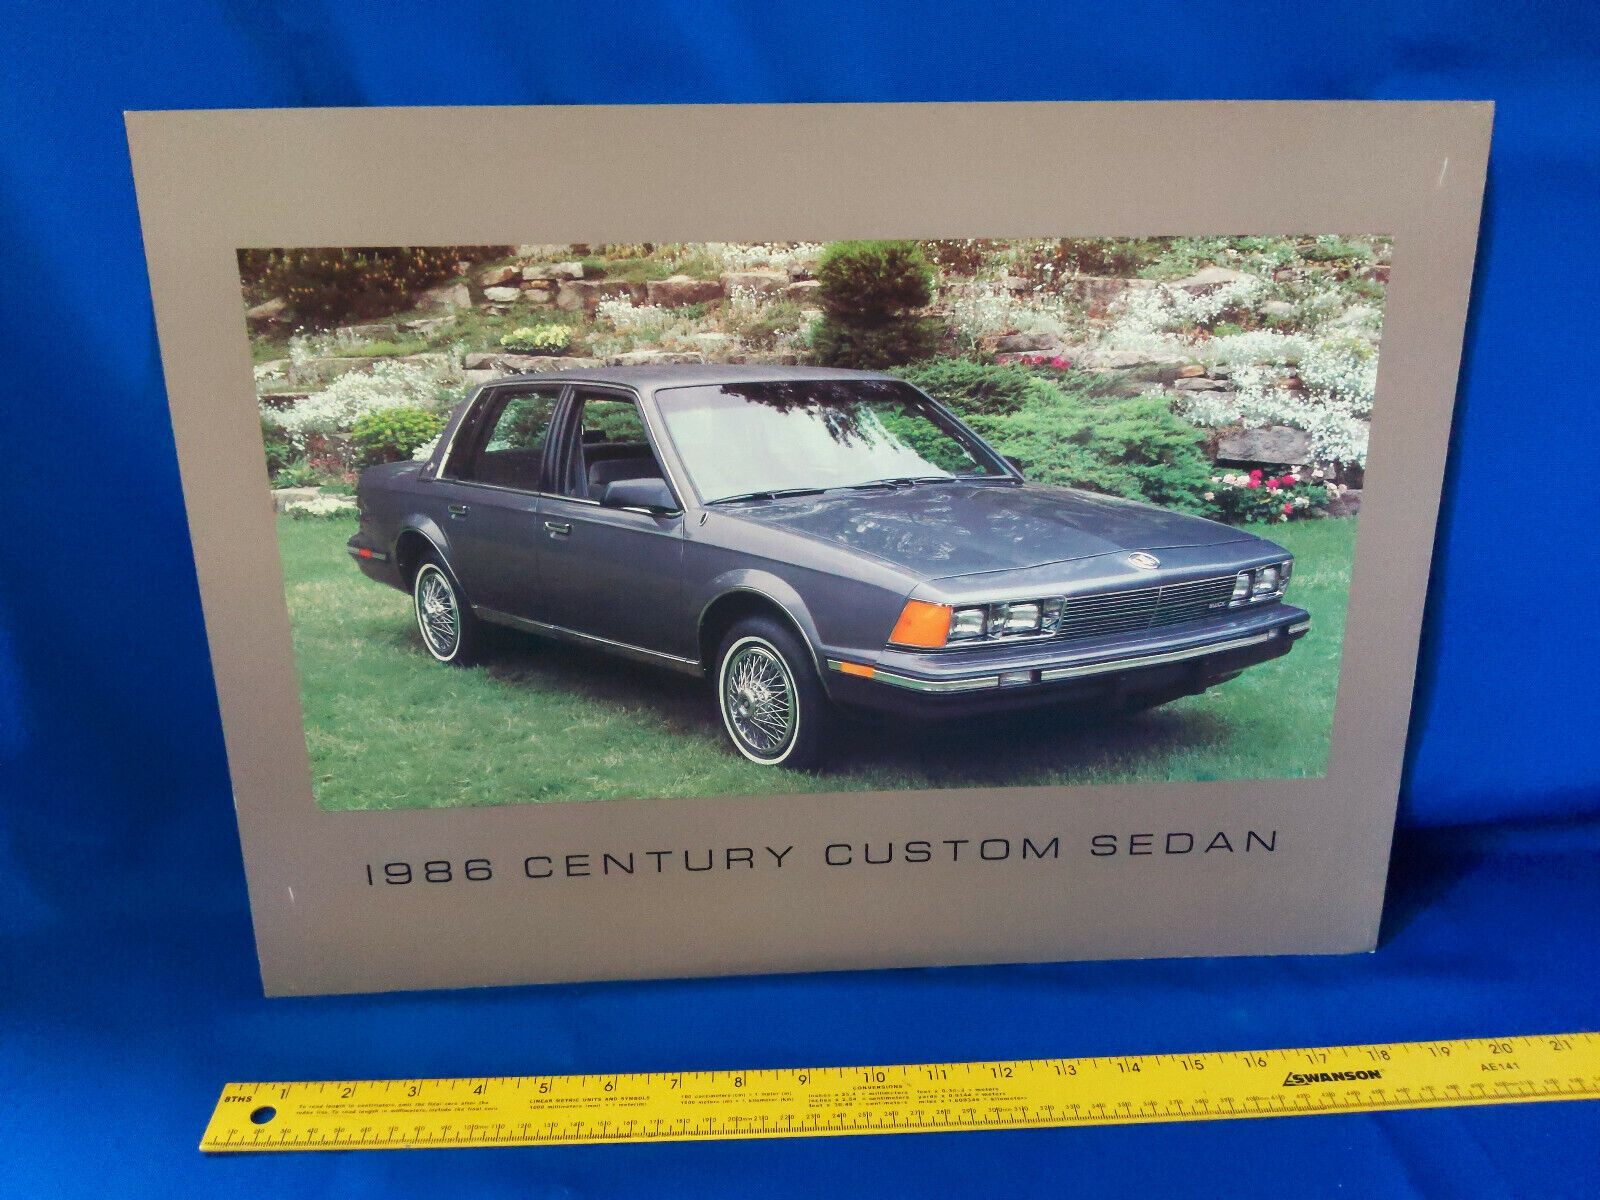 1986 Buick Century Custom Sedan Dealership Sign Poster Car VTG Advertising 19x14